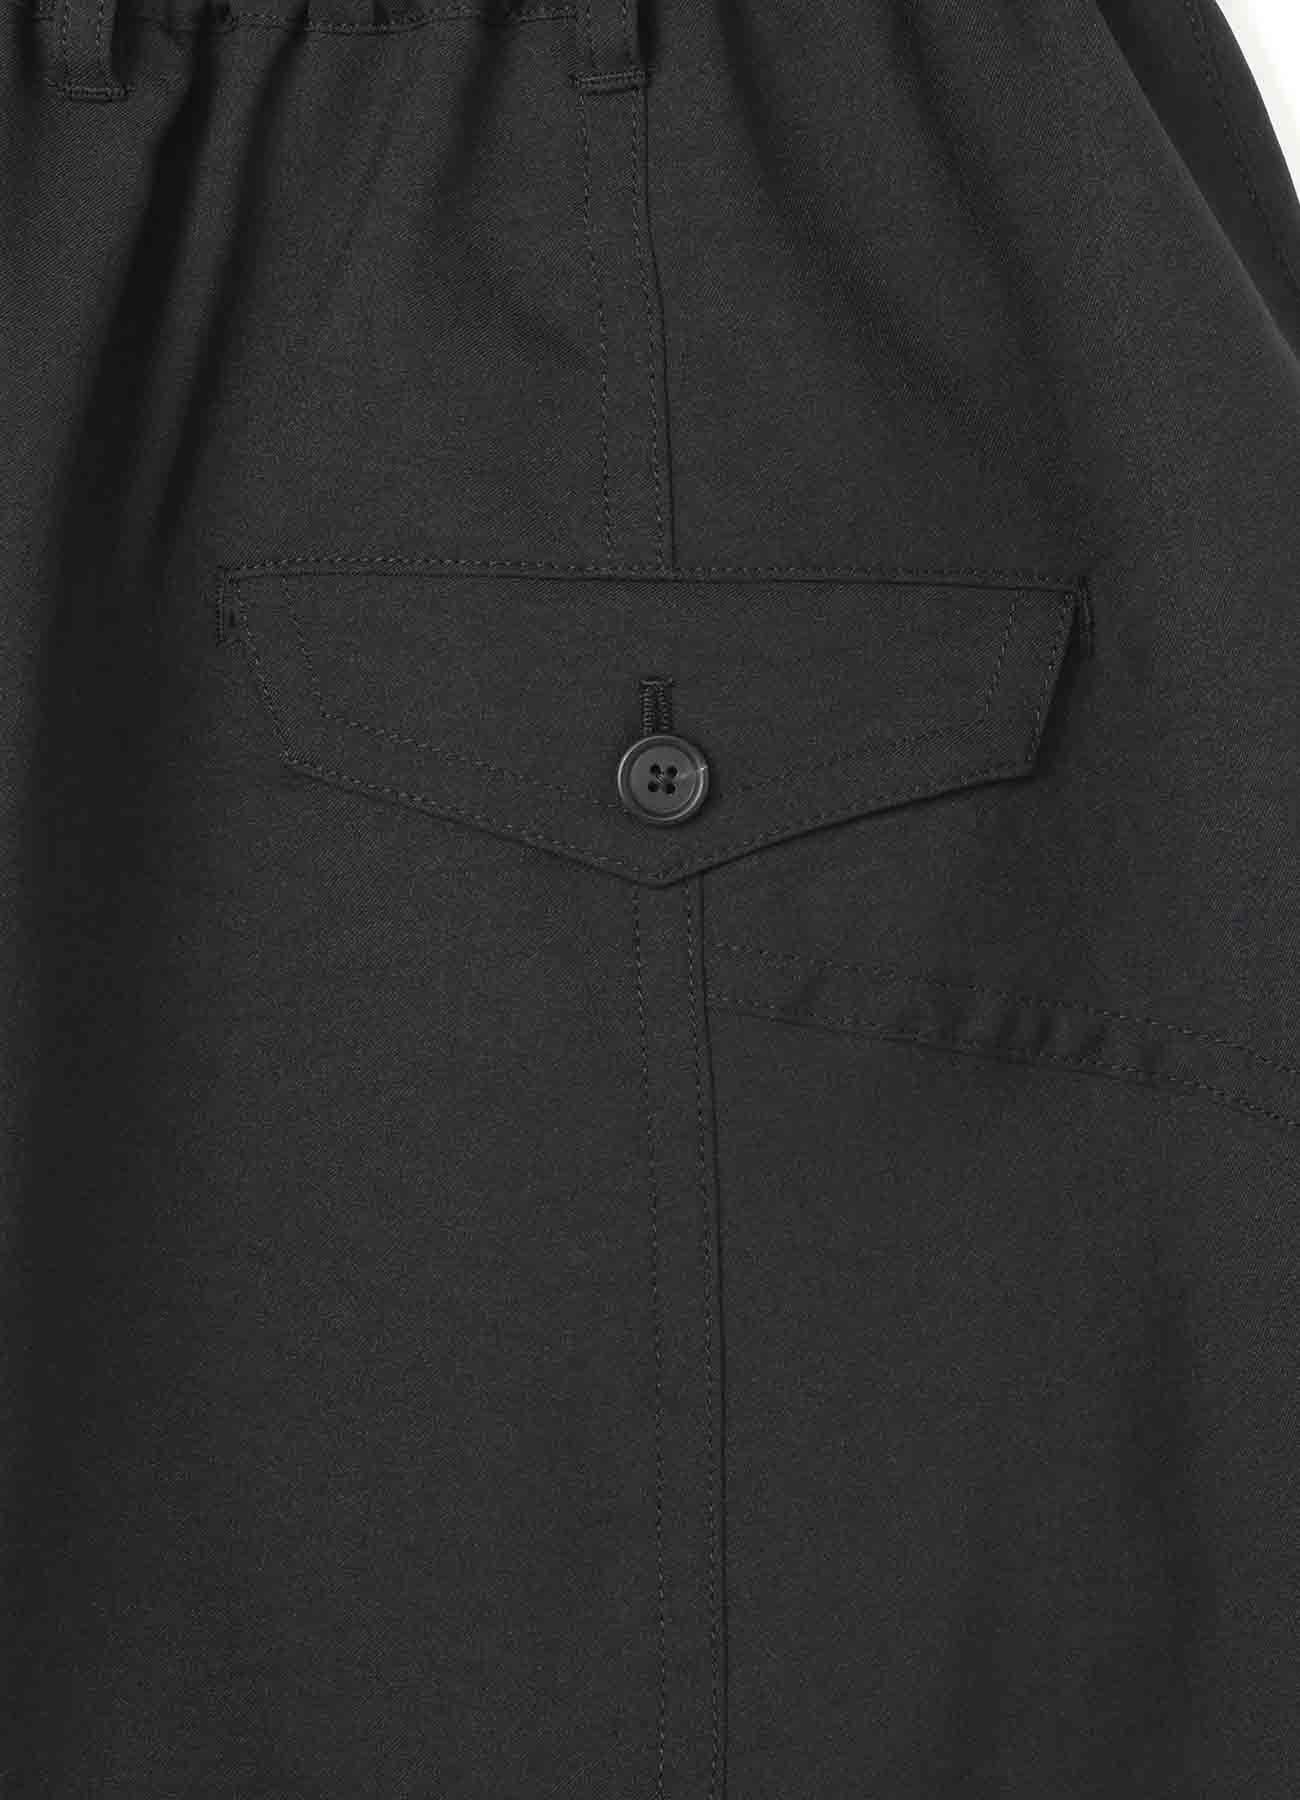 Shiwanoaru P/e Stretch Twill Switching Seam Pocket 6-quarter-length Saruel Pants